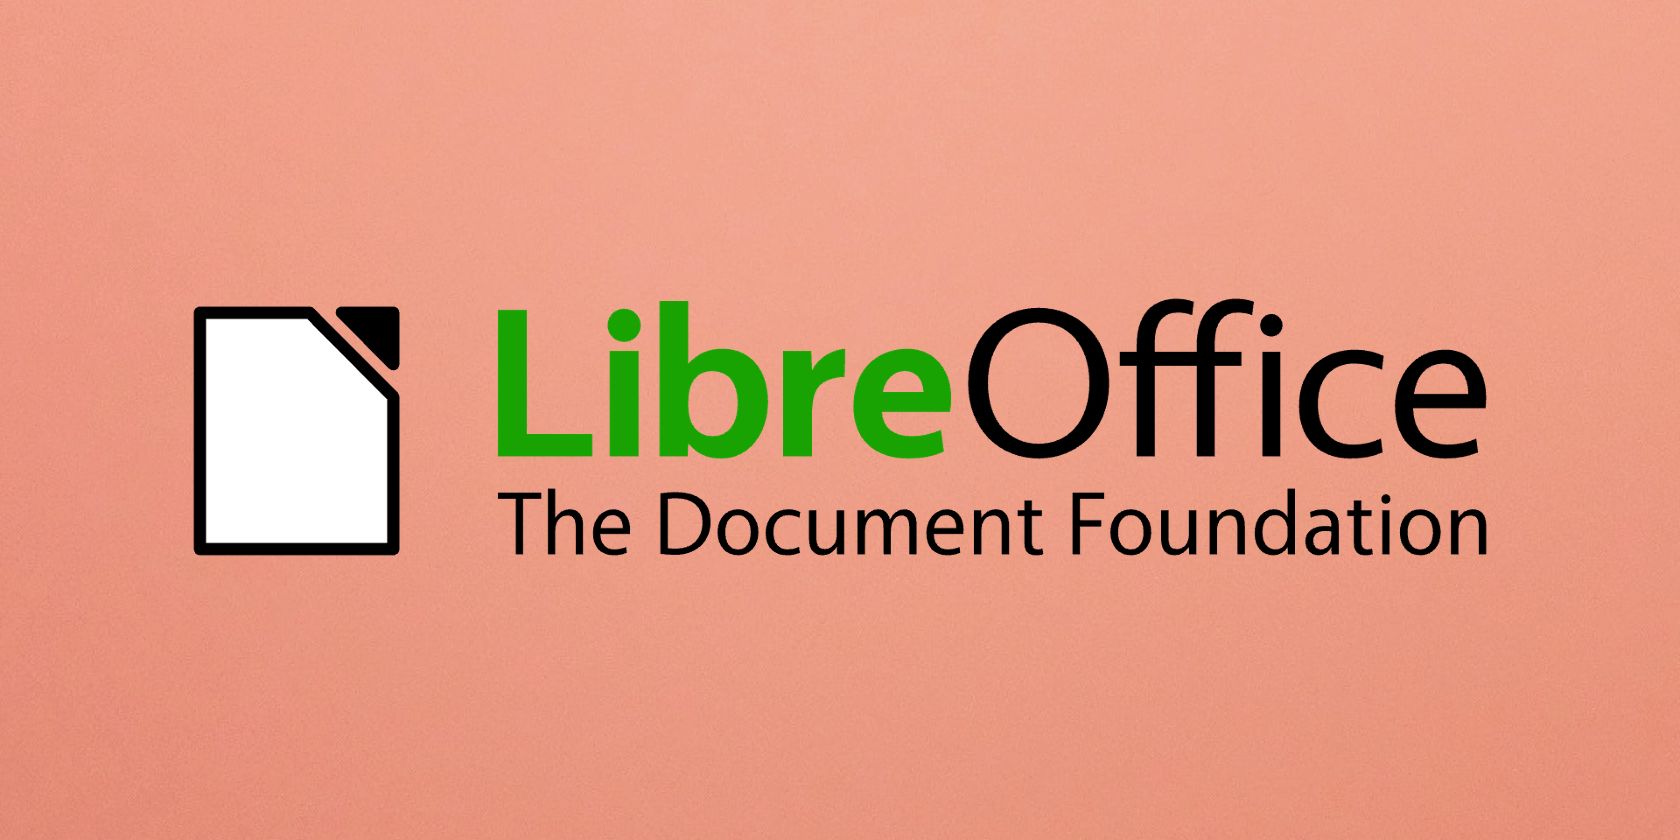 LibreOffice Logo on an orange background